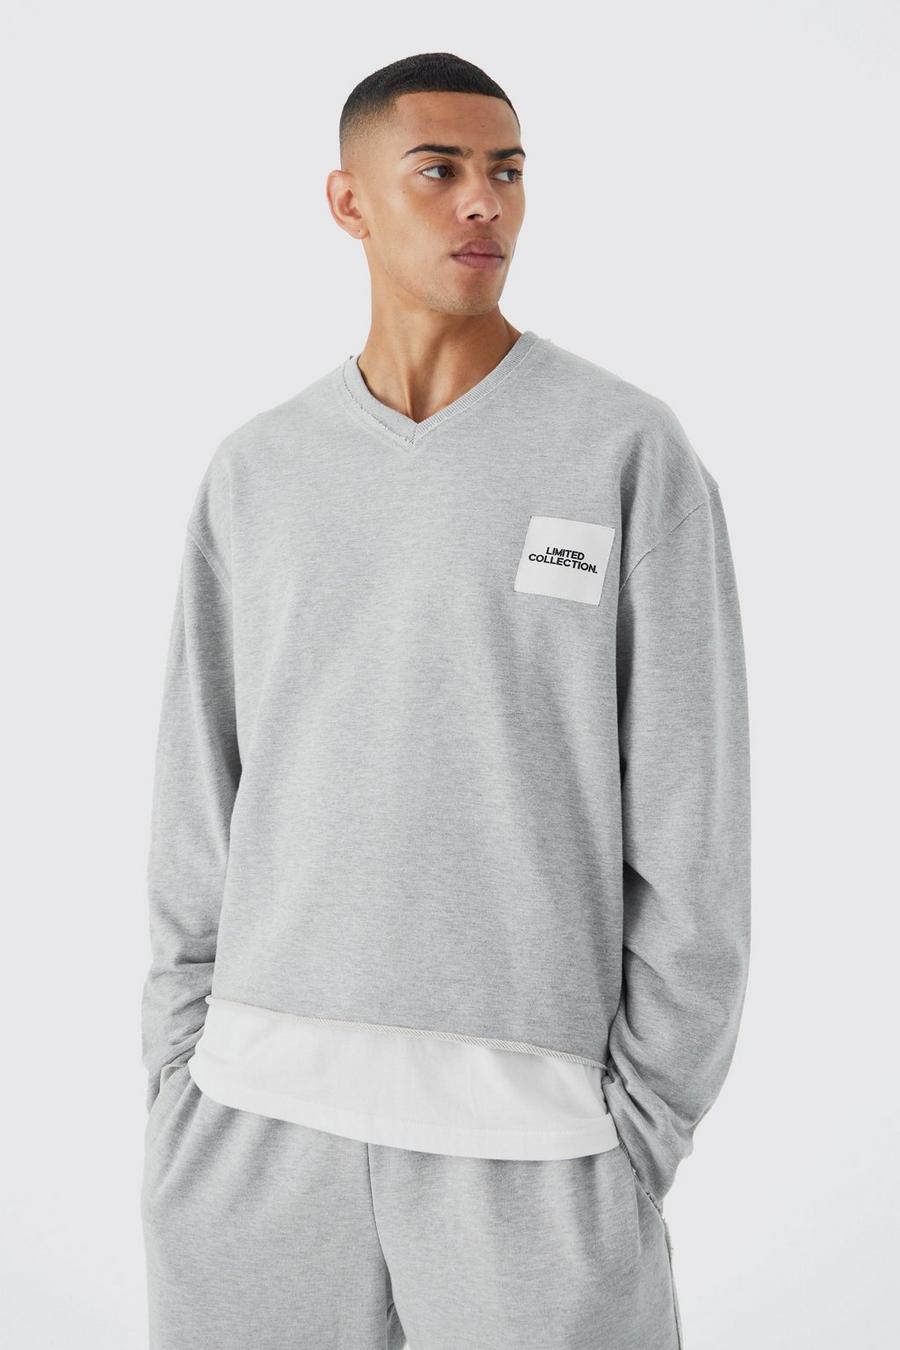 Kastiges Oversize Sweatshirt mit Print, Grey marl